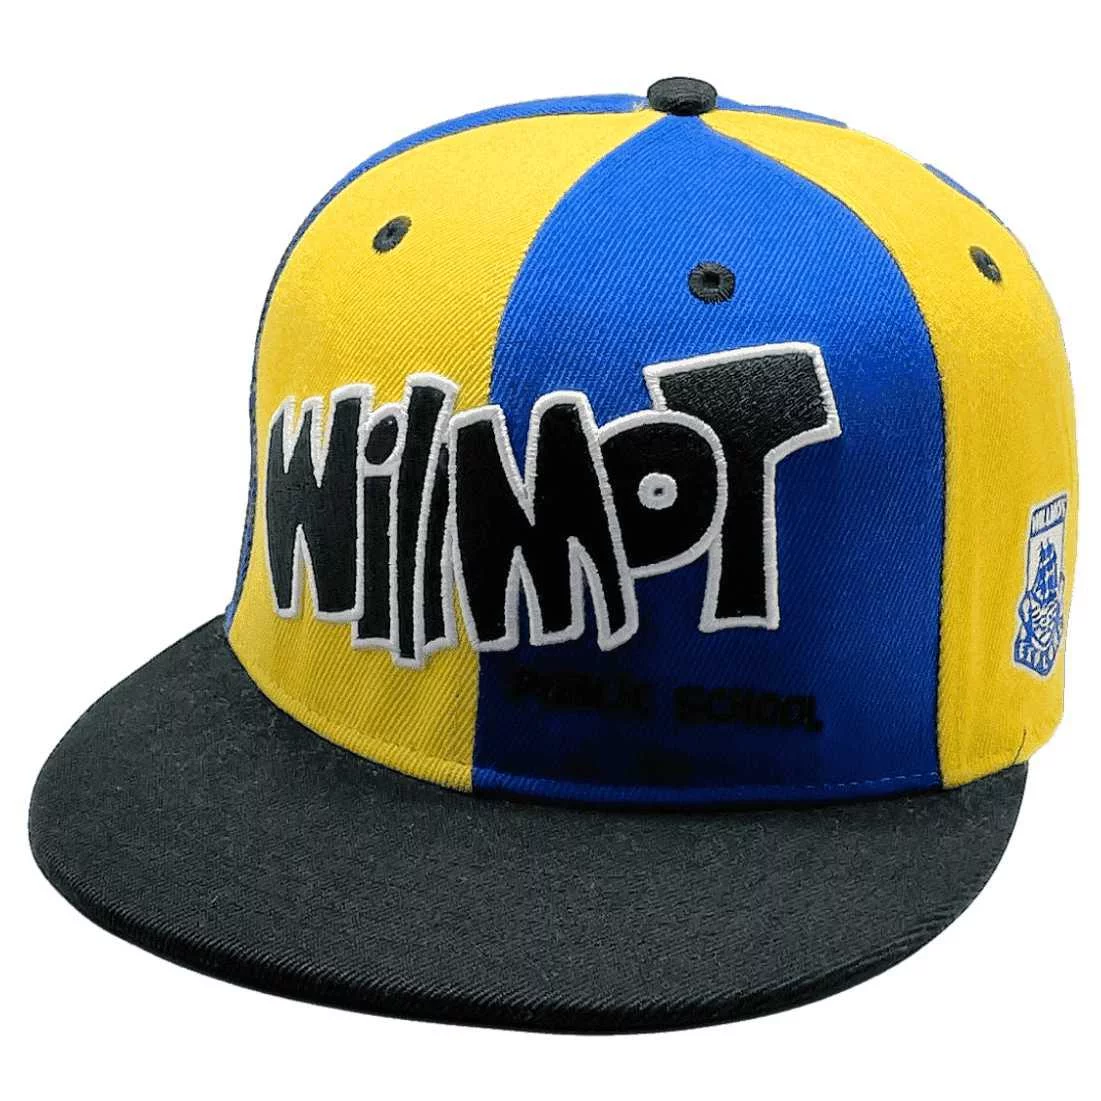 Willmot Public School Willmot NSW - Competition Winner Snapback Flatbrim Cap with Kids Custom Design